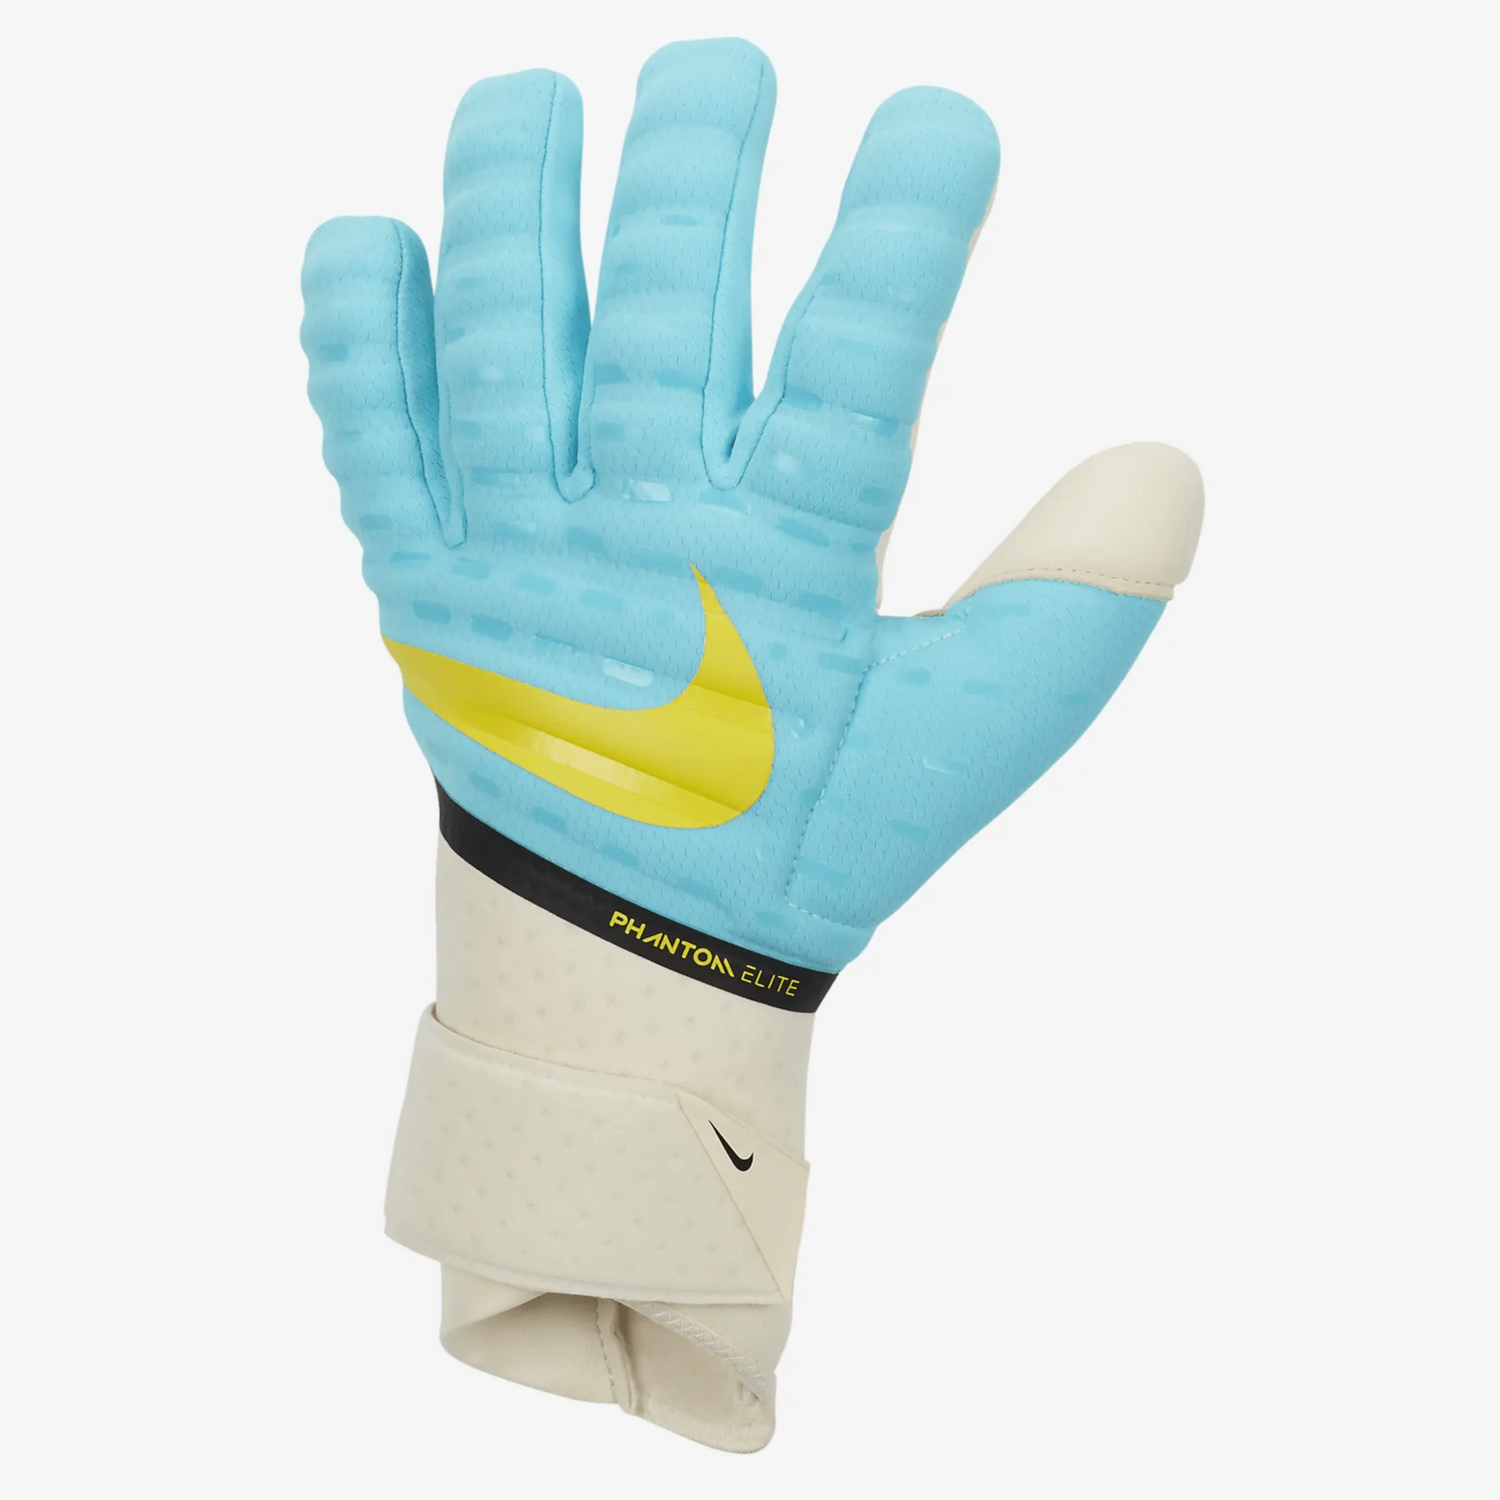 Nike Phantom Elite Goalkeeper Gloves Polarized Blue-Yellow (Single - Outer)